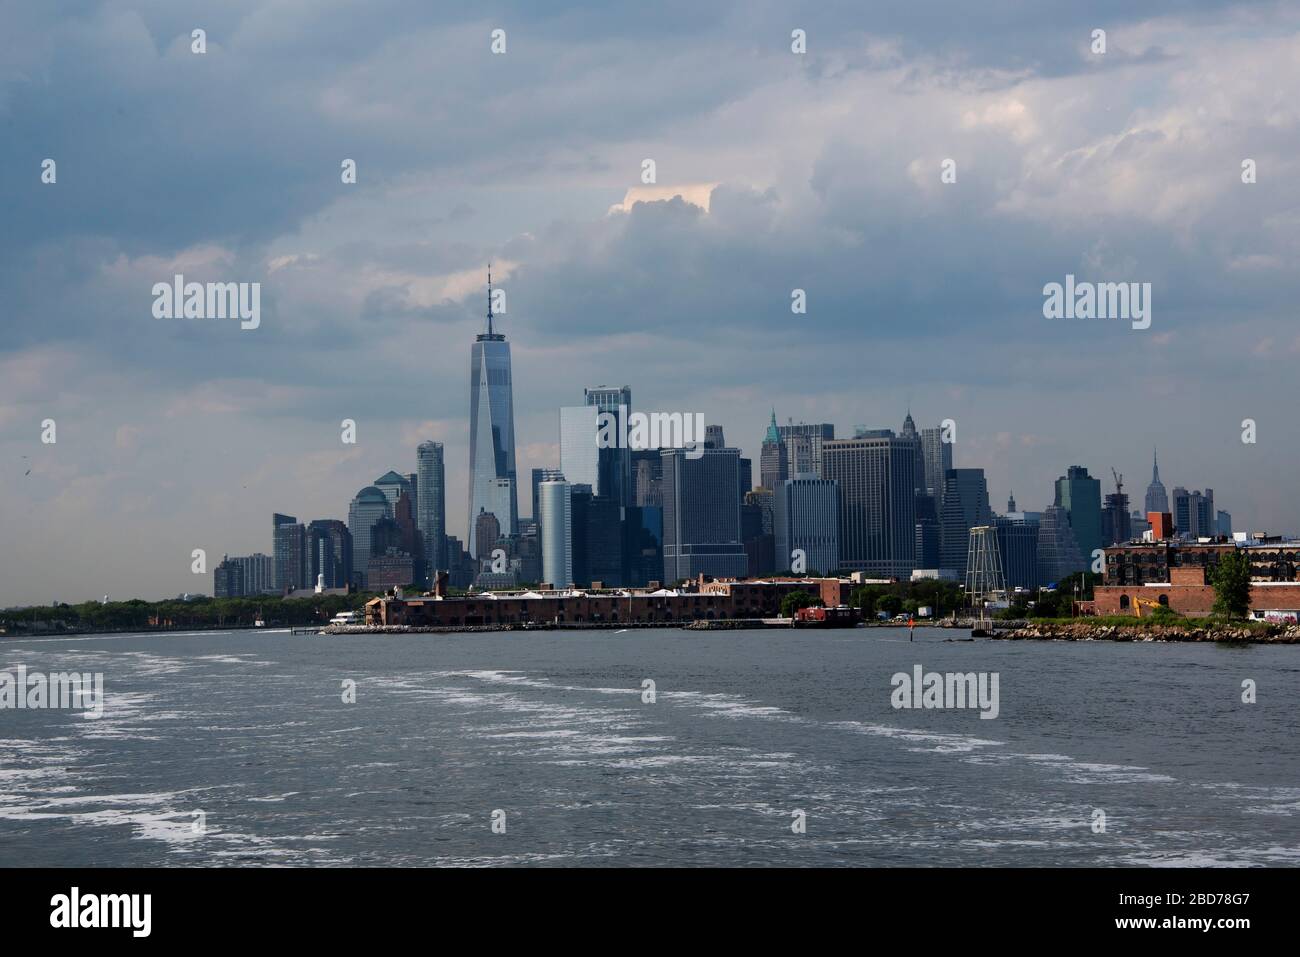 New York, NY - punta meridionale dell'Isola di Manhattan. Foto Stock